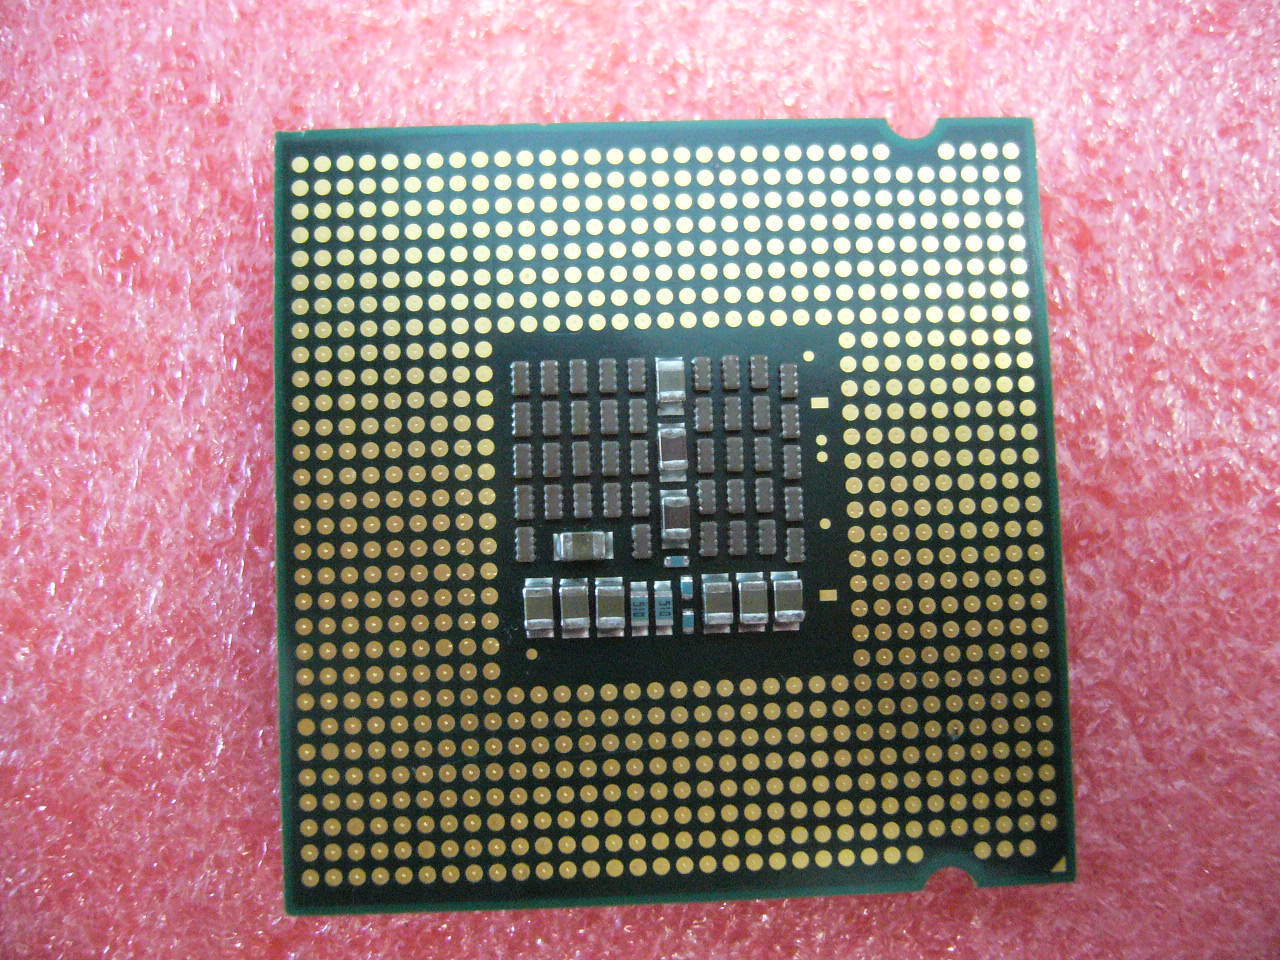 QTY 1x INTEL Core2 Quad Q6600 CPU 2.40GHz/8MB/1066Mhz LGA775 SLACR - Click Image to Close